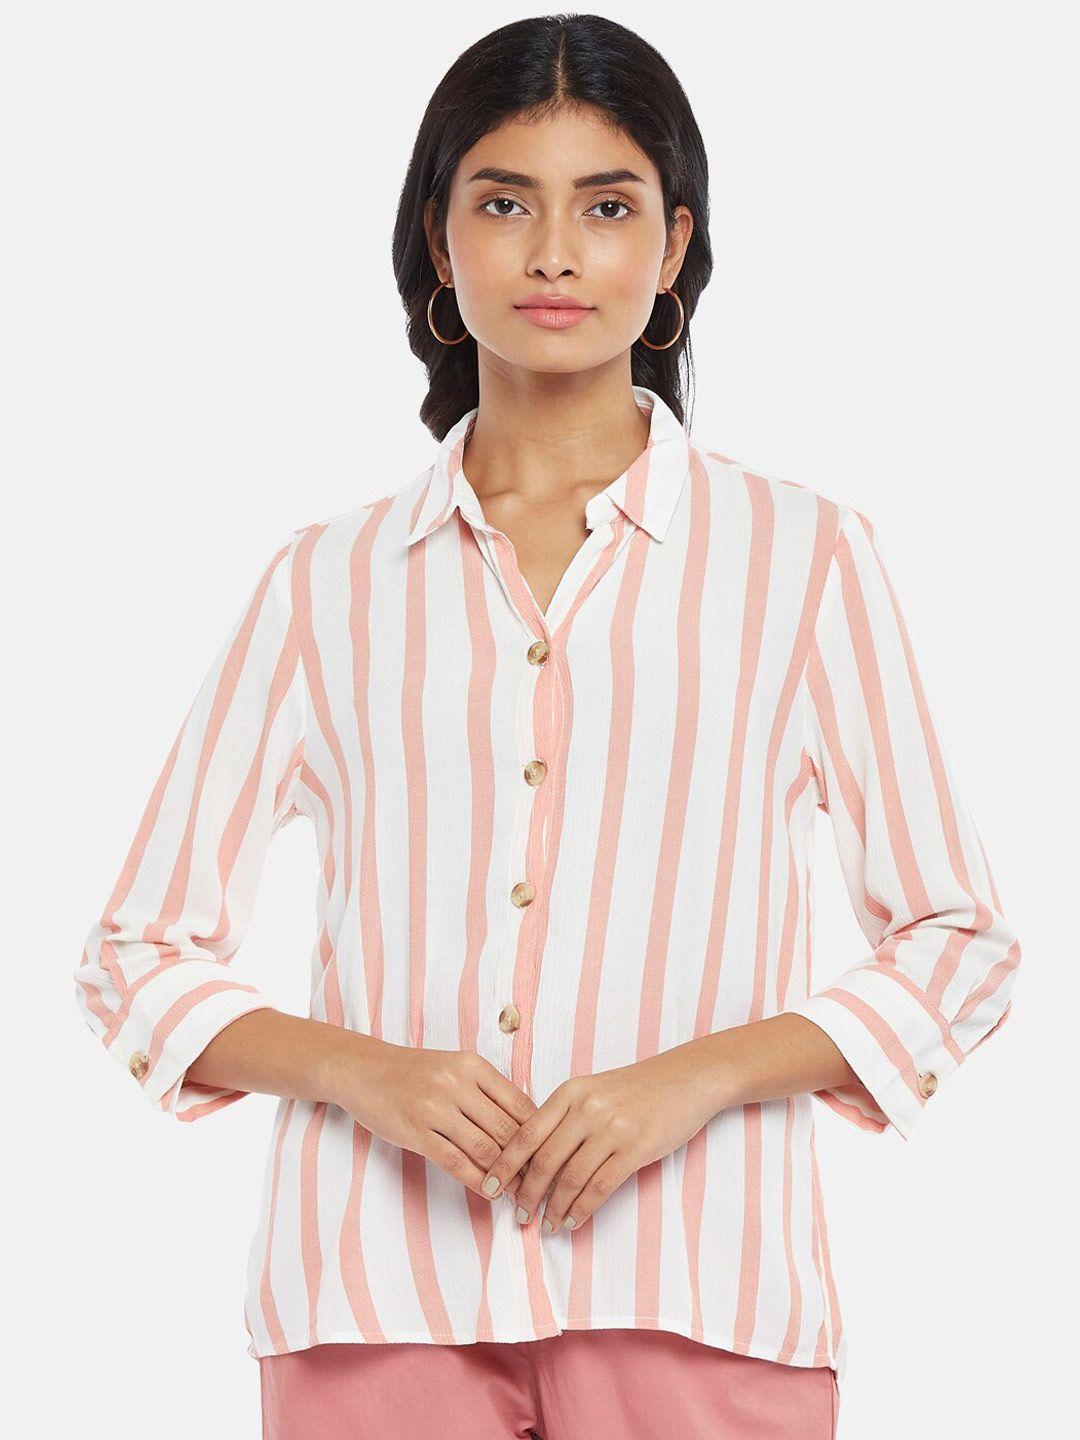 honey-by-pantaloons-women-peach-&-white-striped-shirt-style-top